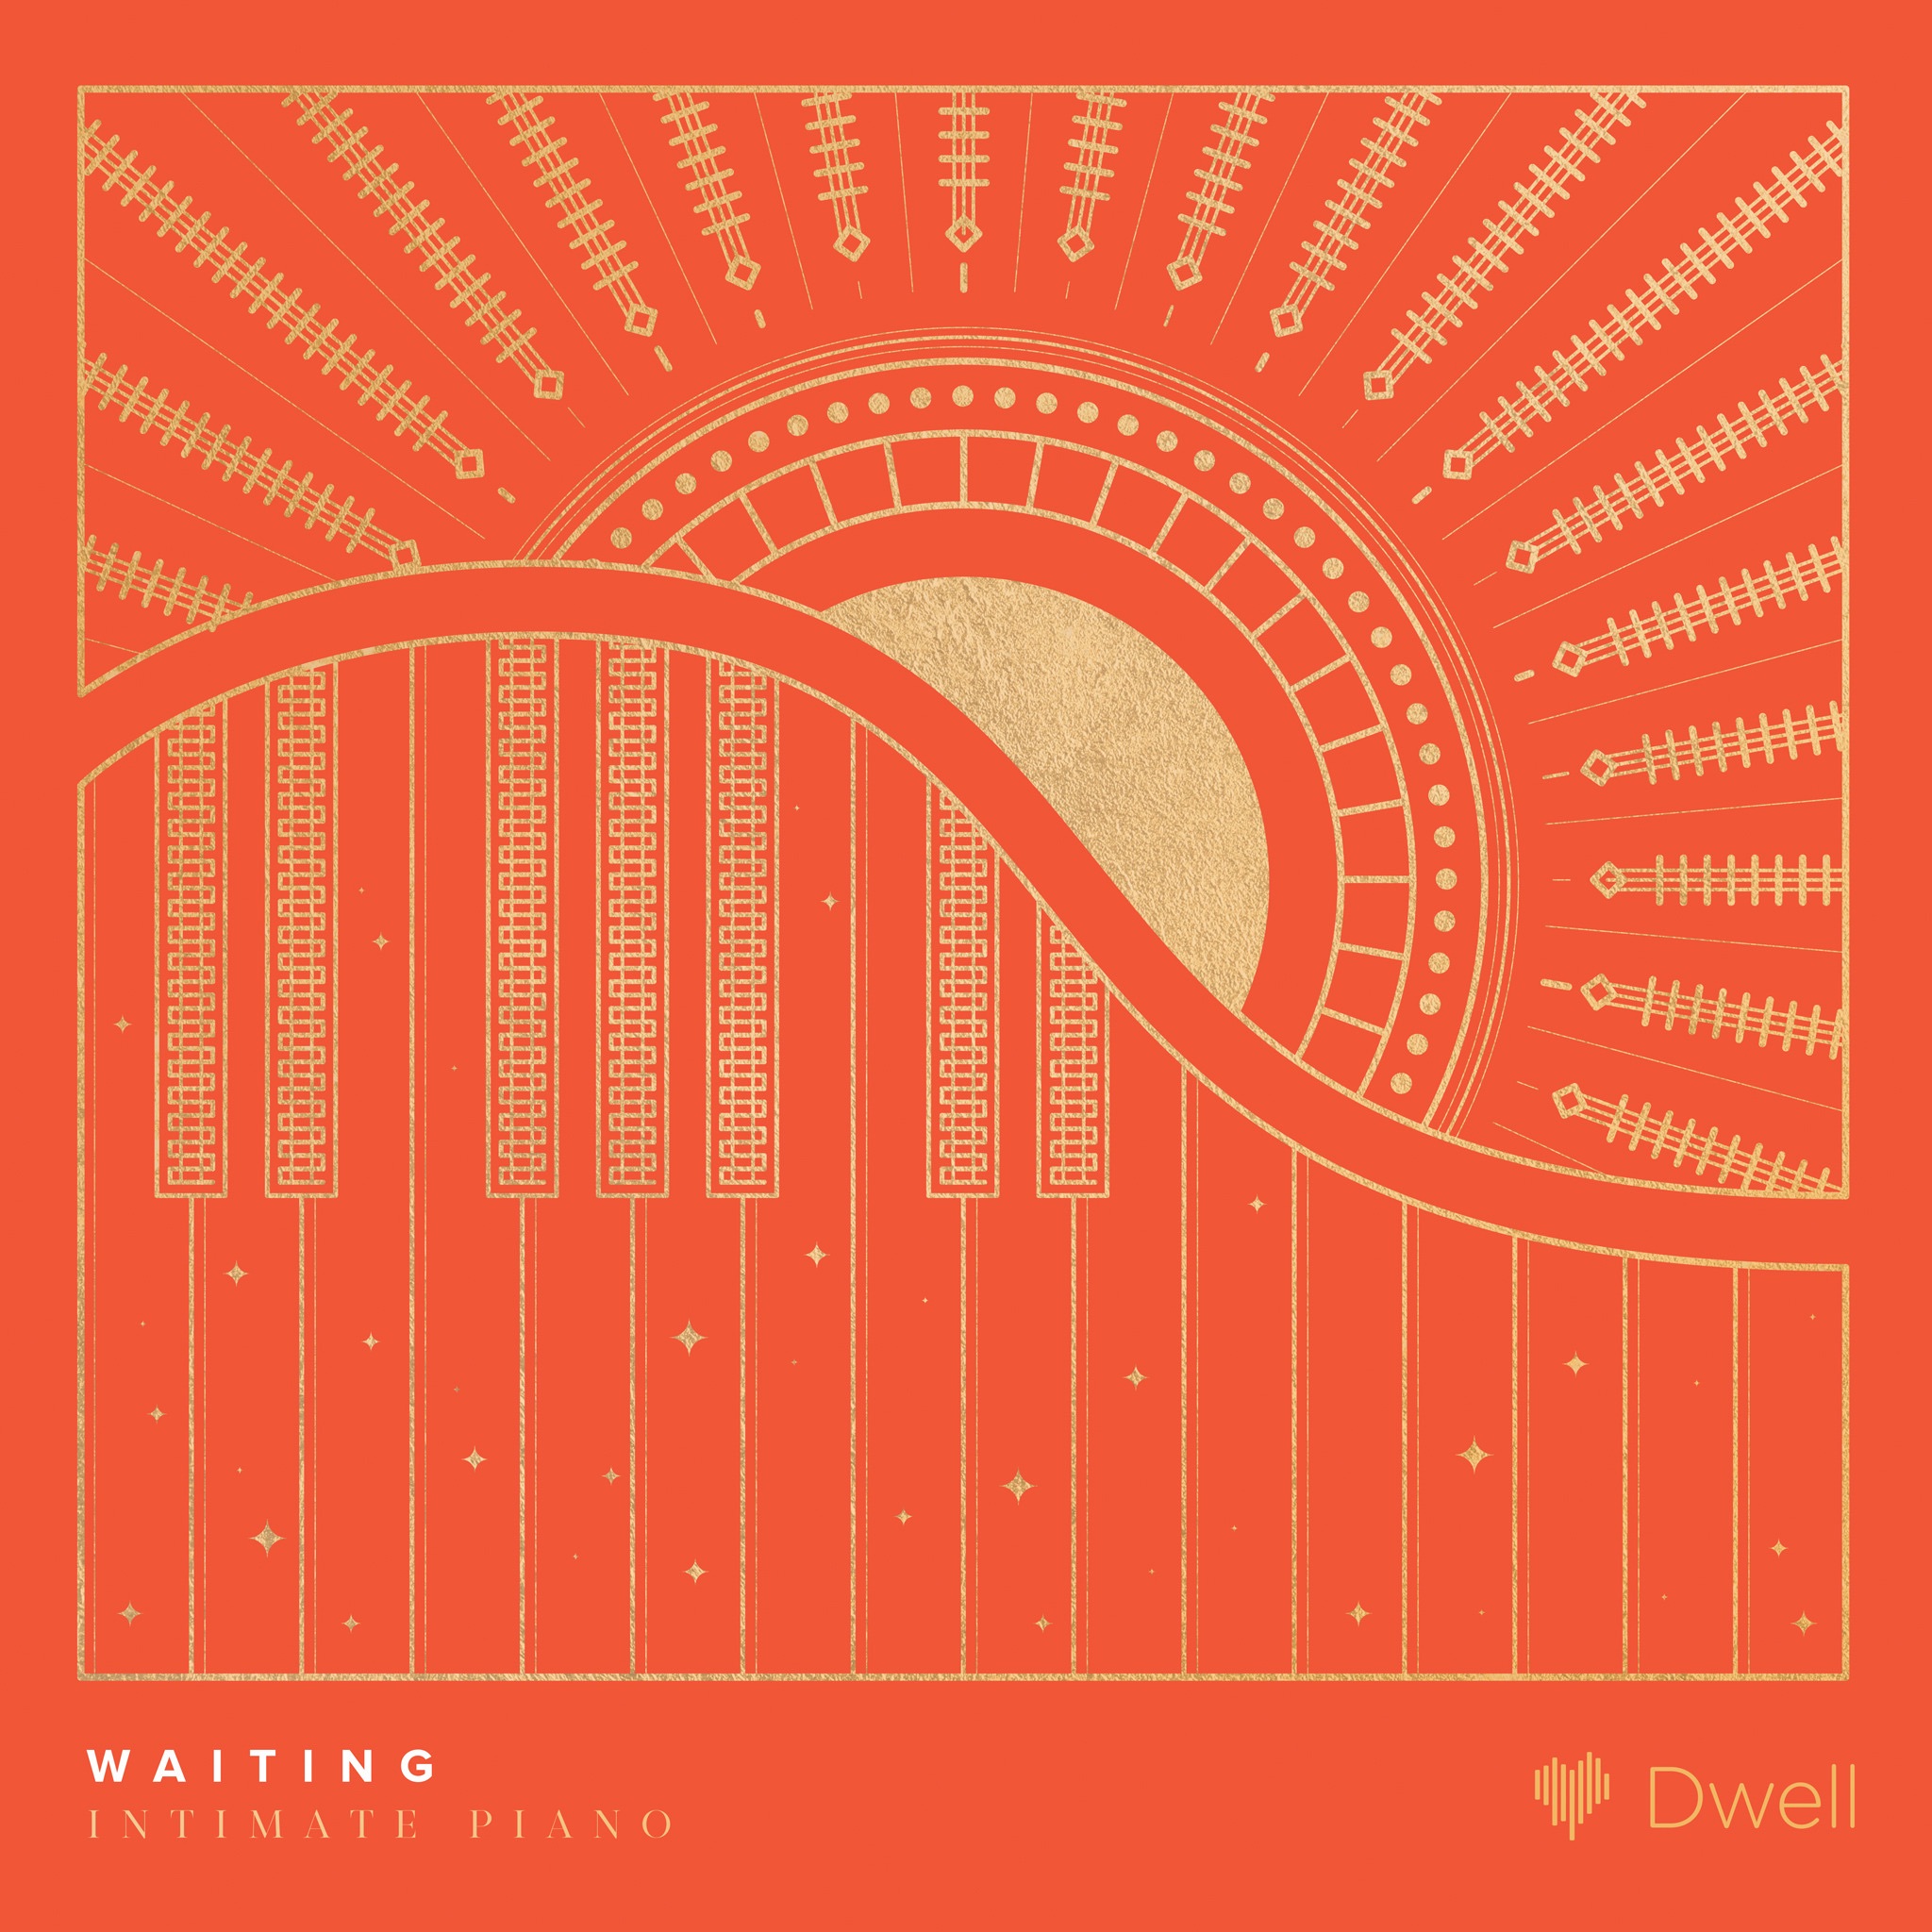 Waiting music. Dwell Songs.